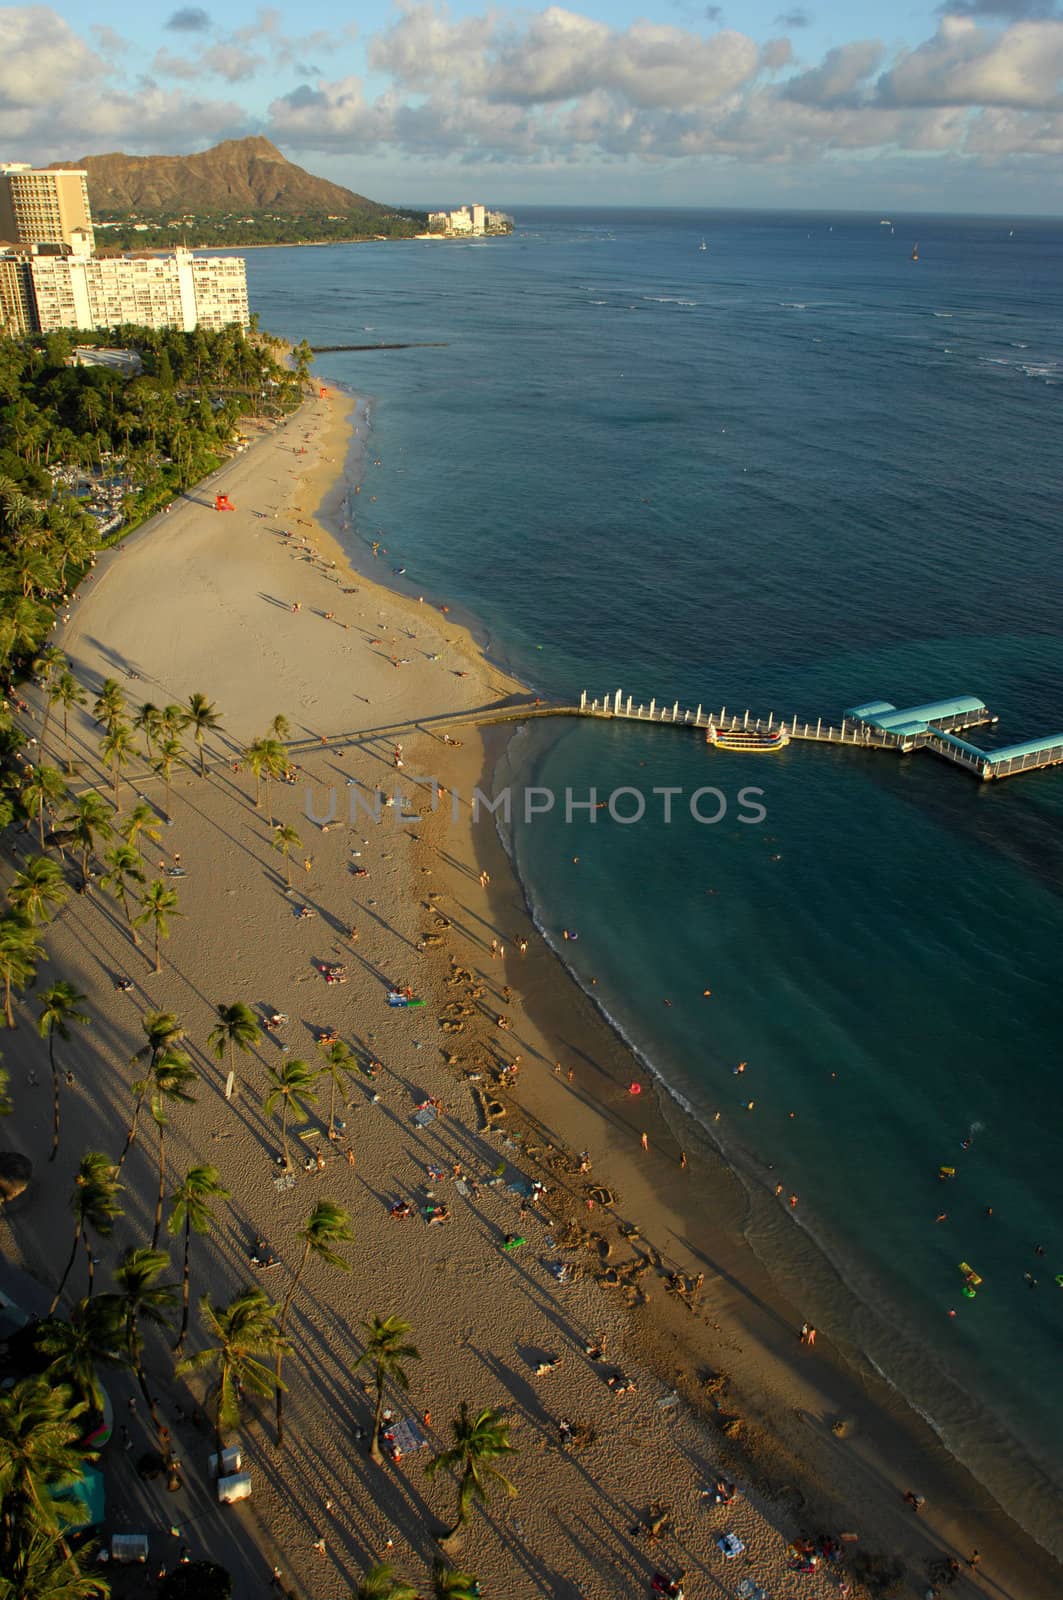 Looking down at Waikiki Beach in Honolulu, Hawaii and across to Diamond Head as the sun sets.